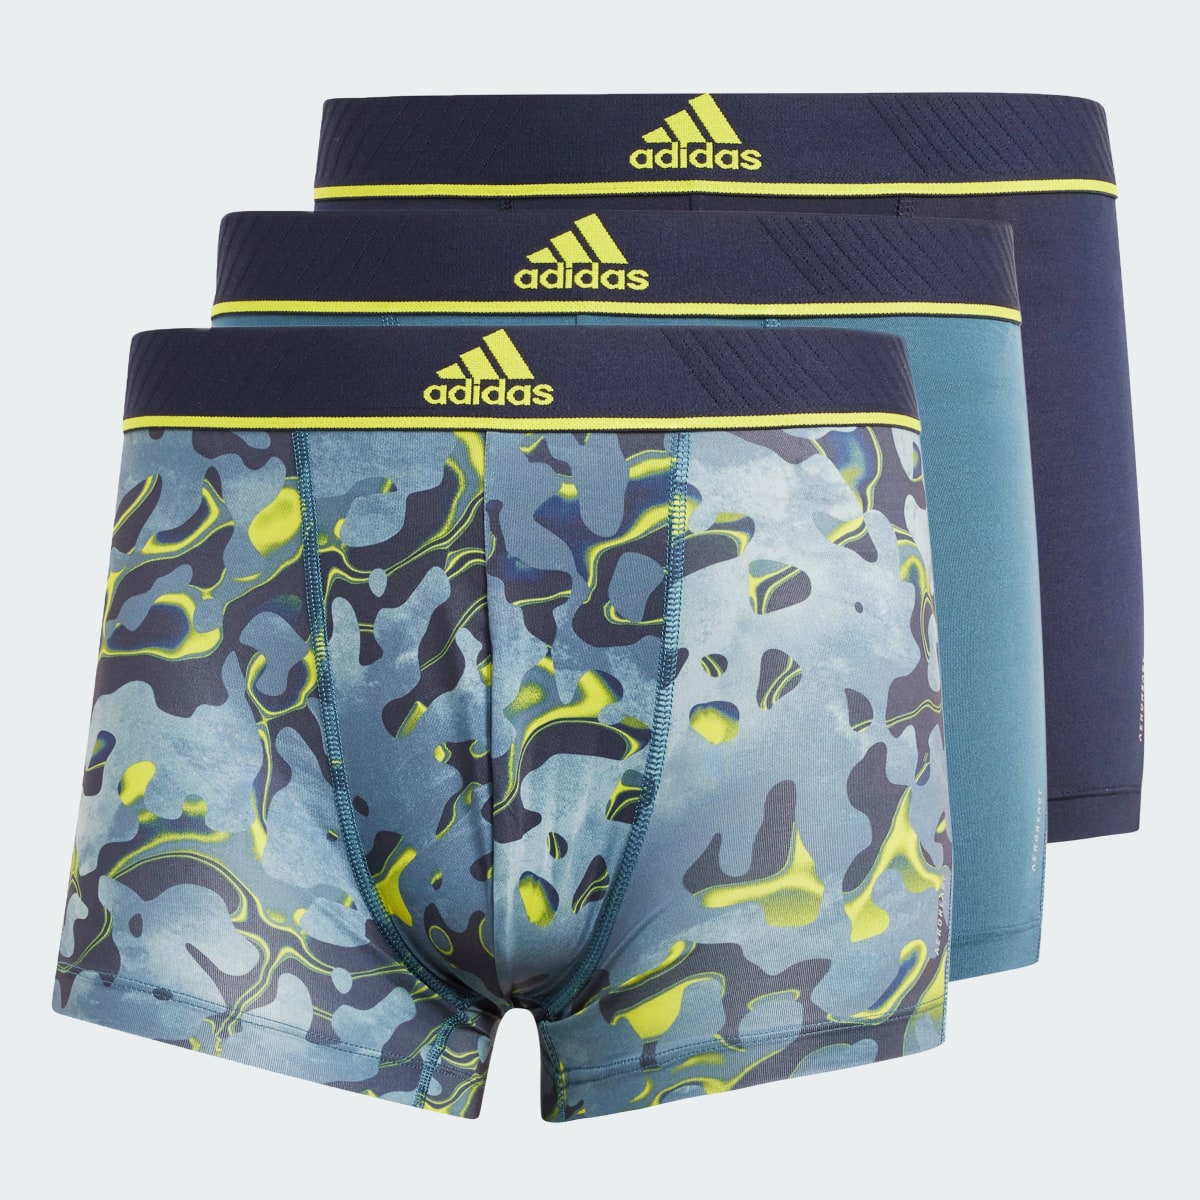 Adidas Active Micro Flex Eco Trunk Underwear 3 Pack. 7